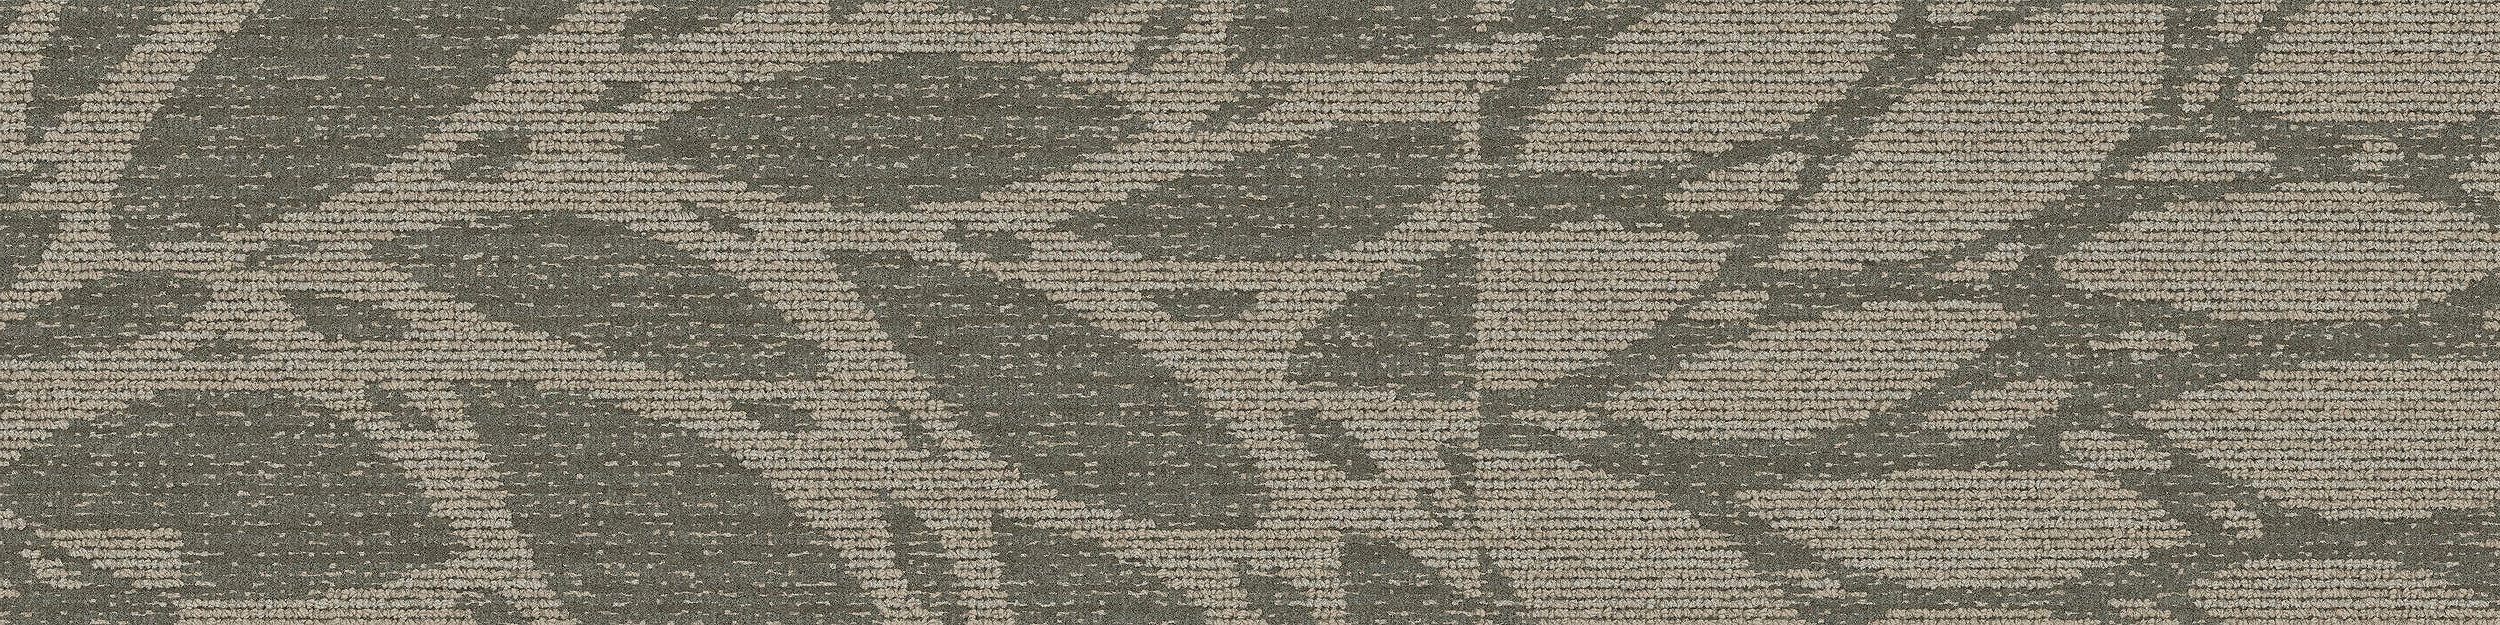 GN157 Carpet Tile In Pewter numéro d’image 3